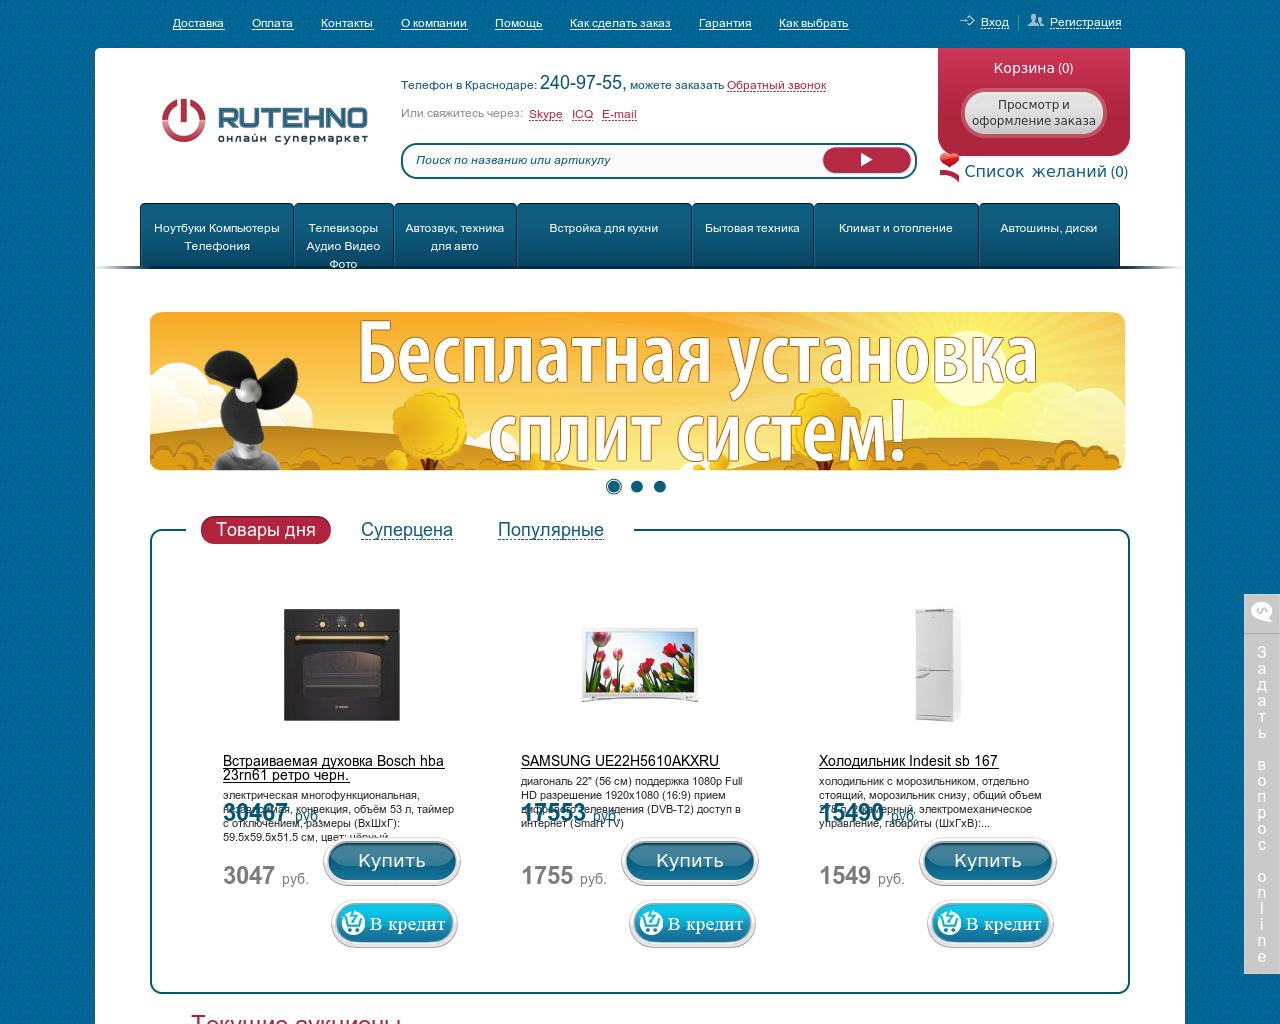 Изображение сайта rutehno.ru в разрешении 1280x1024